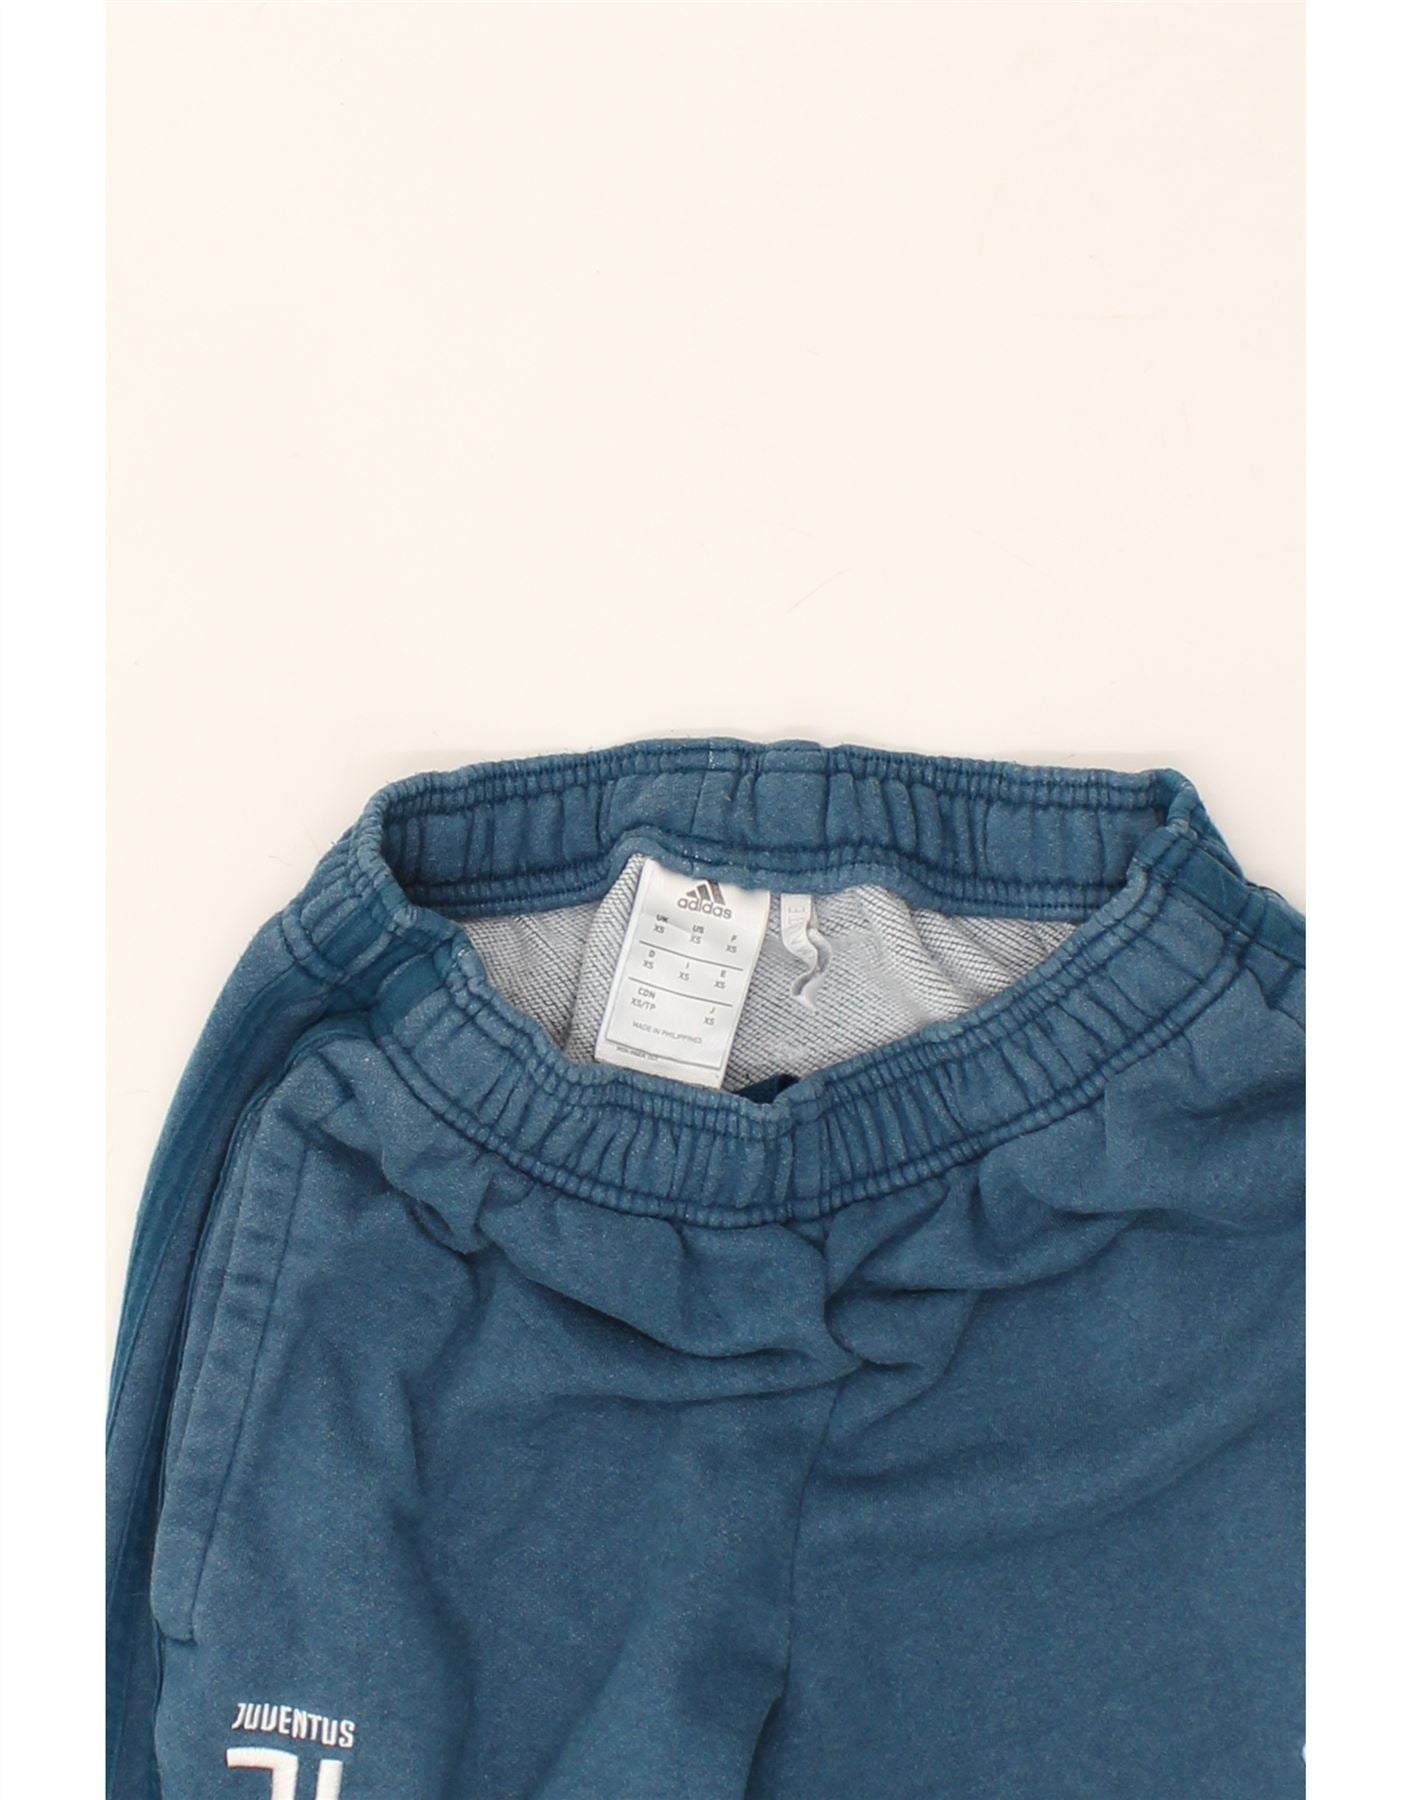 ADIDAS Homme Climalite Survêtement Pantalon Joggers XS Bleu Marine Coton | Vintage Adidas | Économie | Adidas d'occasion | Vêtements d'occasion | Messine Hembry